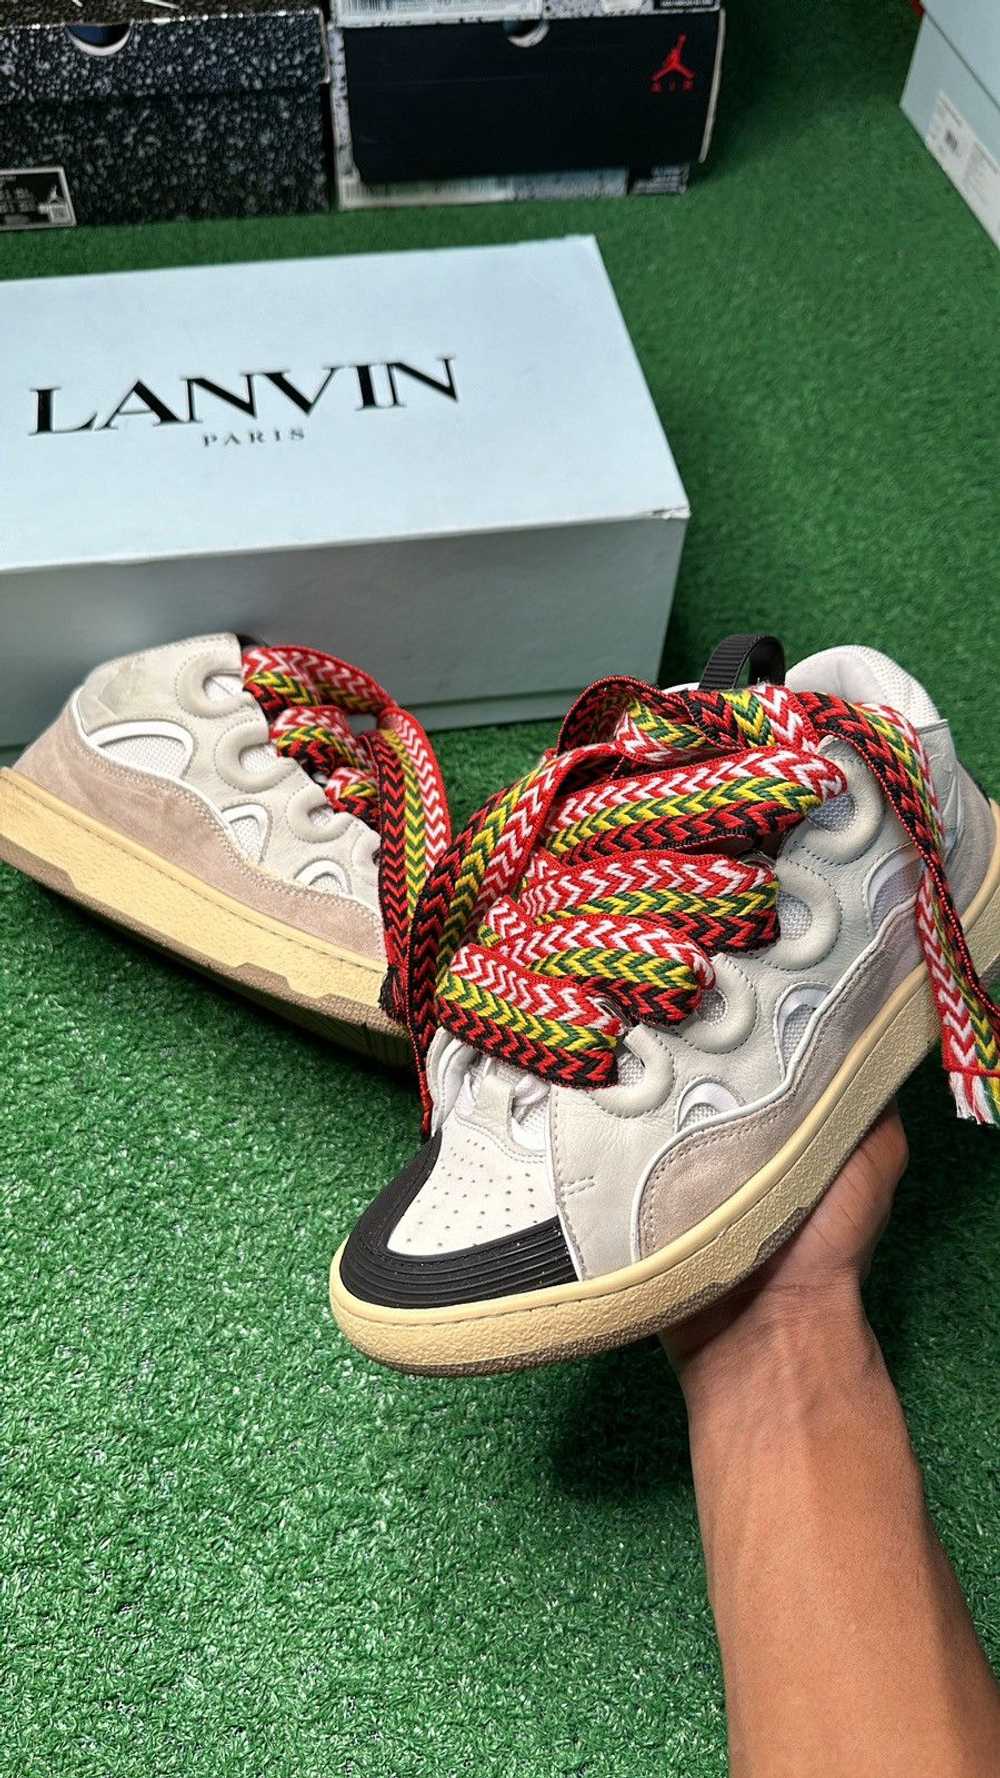 Lanvin Lanvin curb sneaker white - image 1